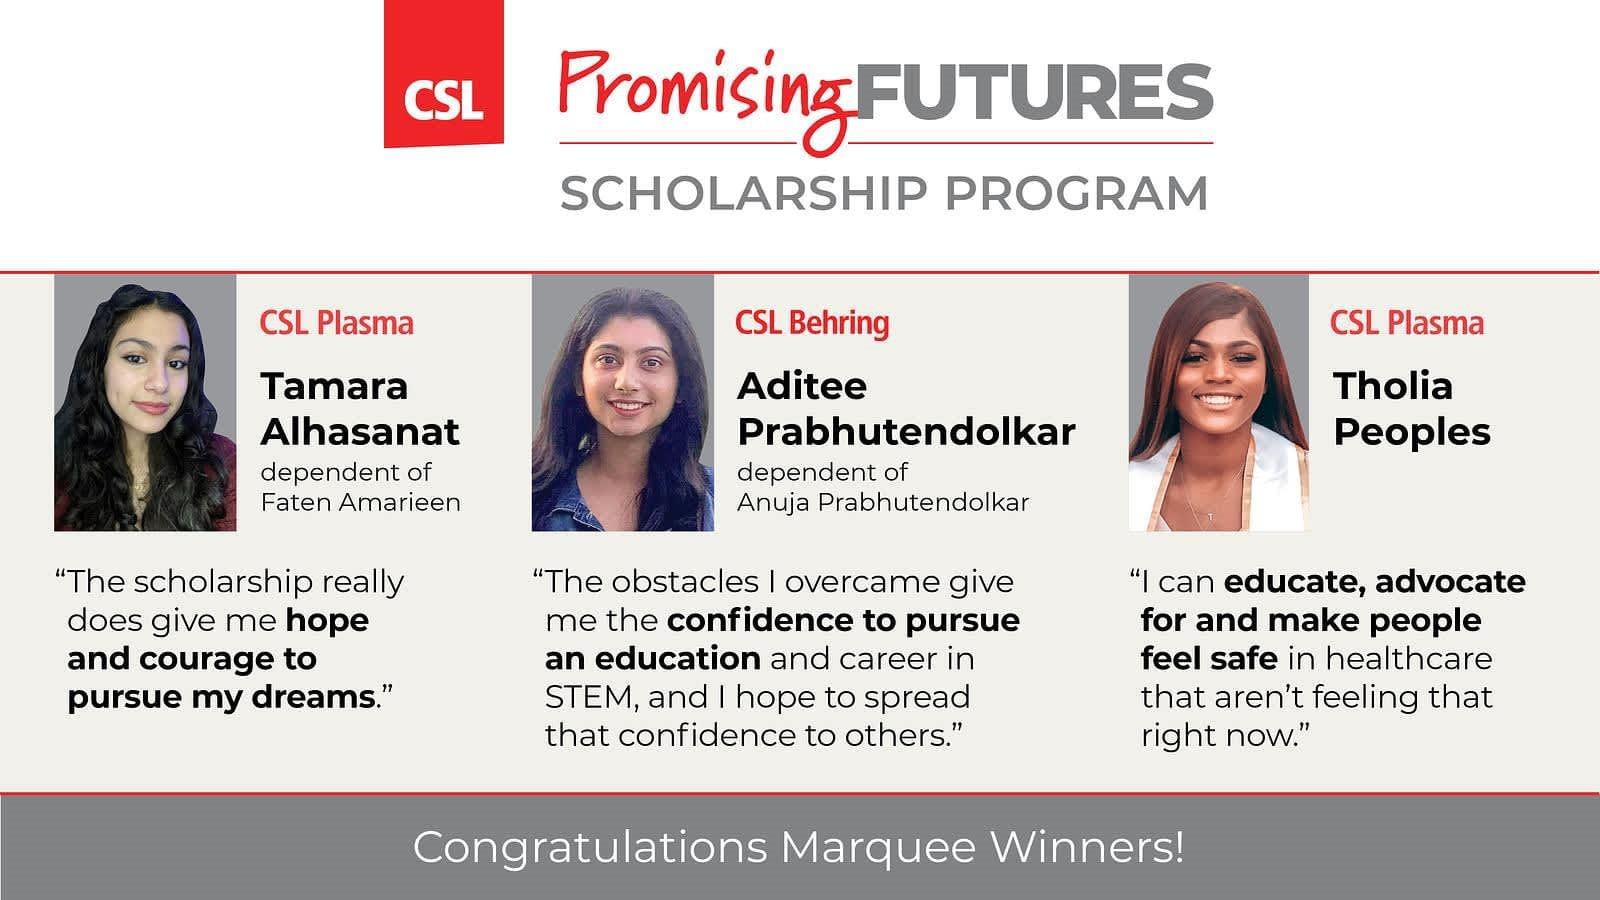 CSL Promising Futures Scholarship Program with three 2022 winners